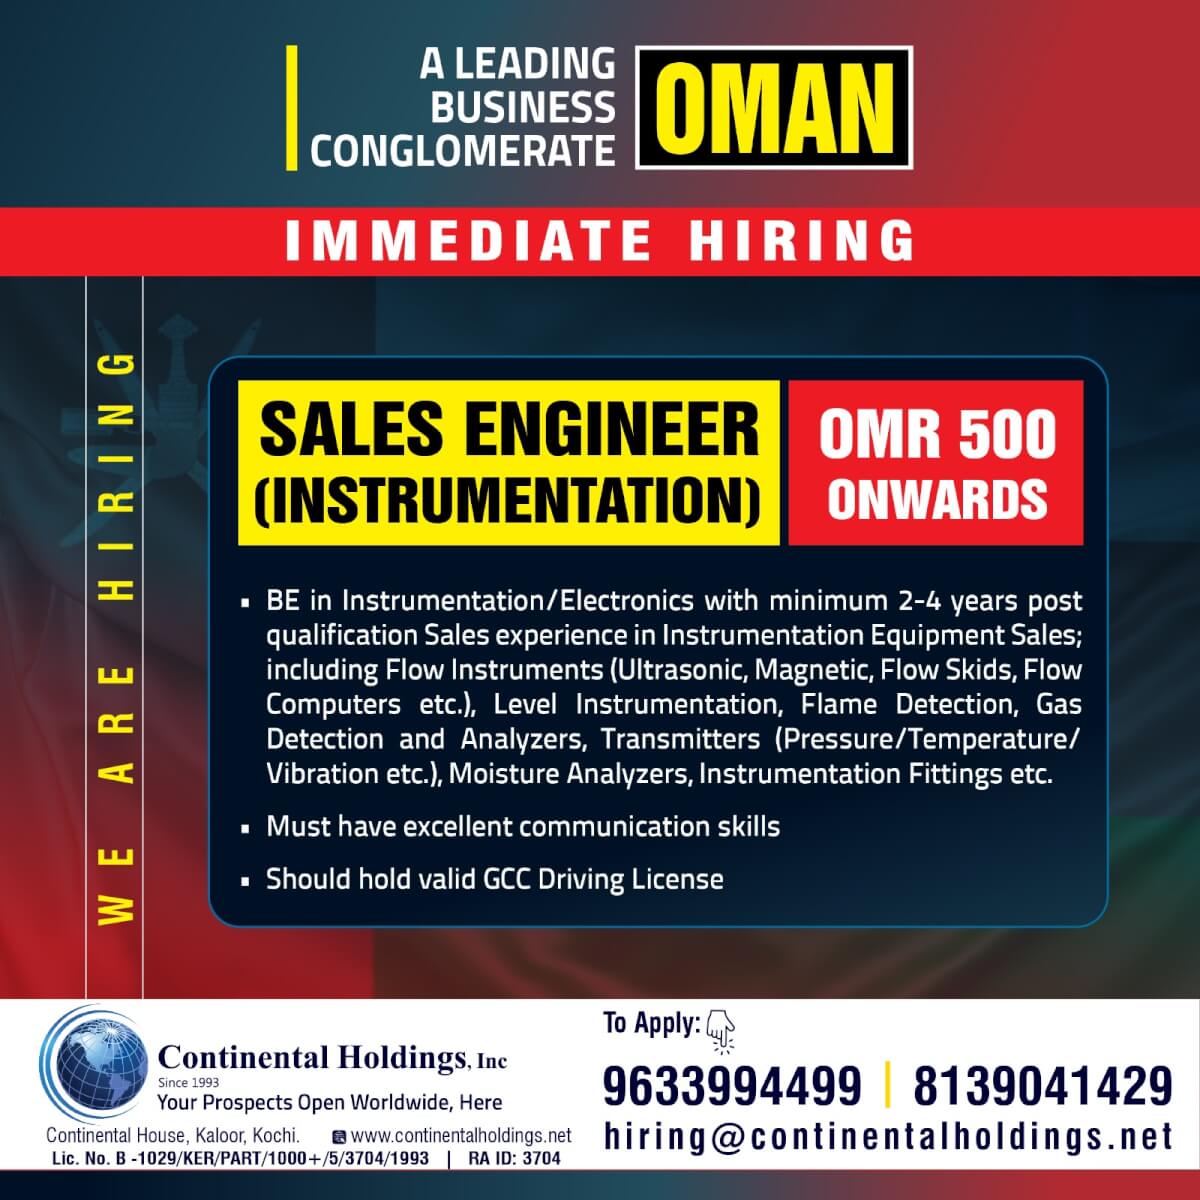 Hiring for Oman - Sales Engineer (Instrumentation)